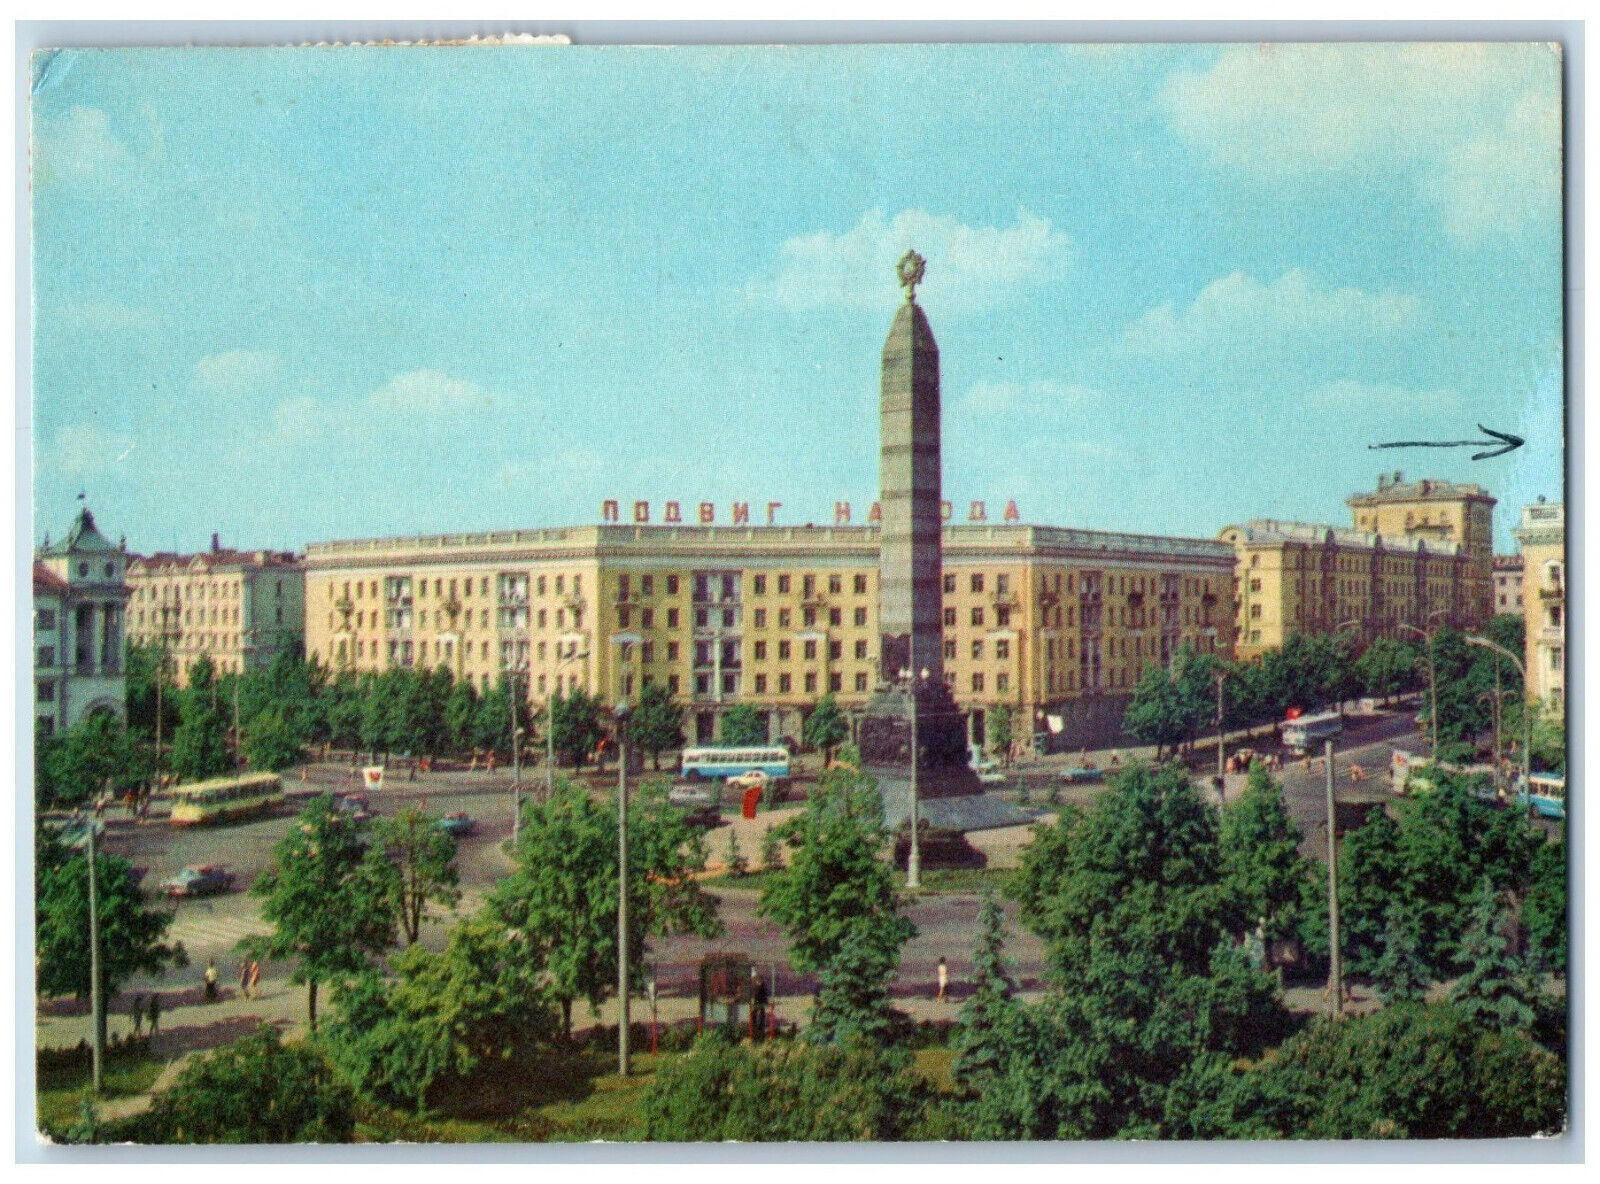 Minsk Belarus Postcard Building Monument in Victoria Square 1975 Posted Vintage